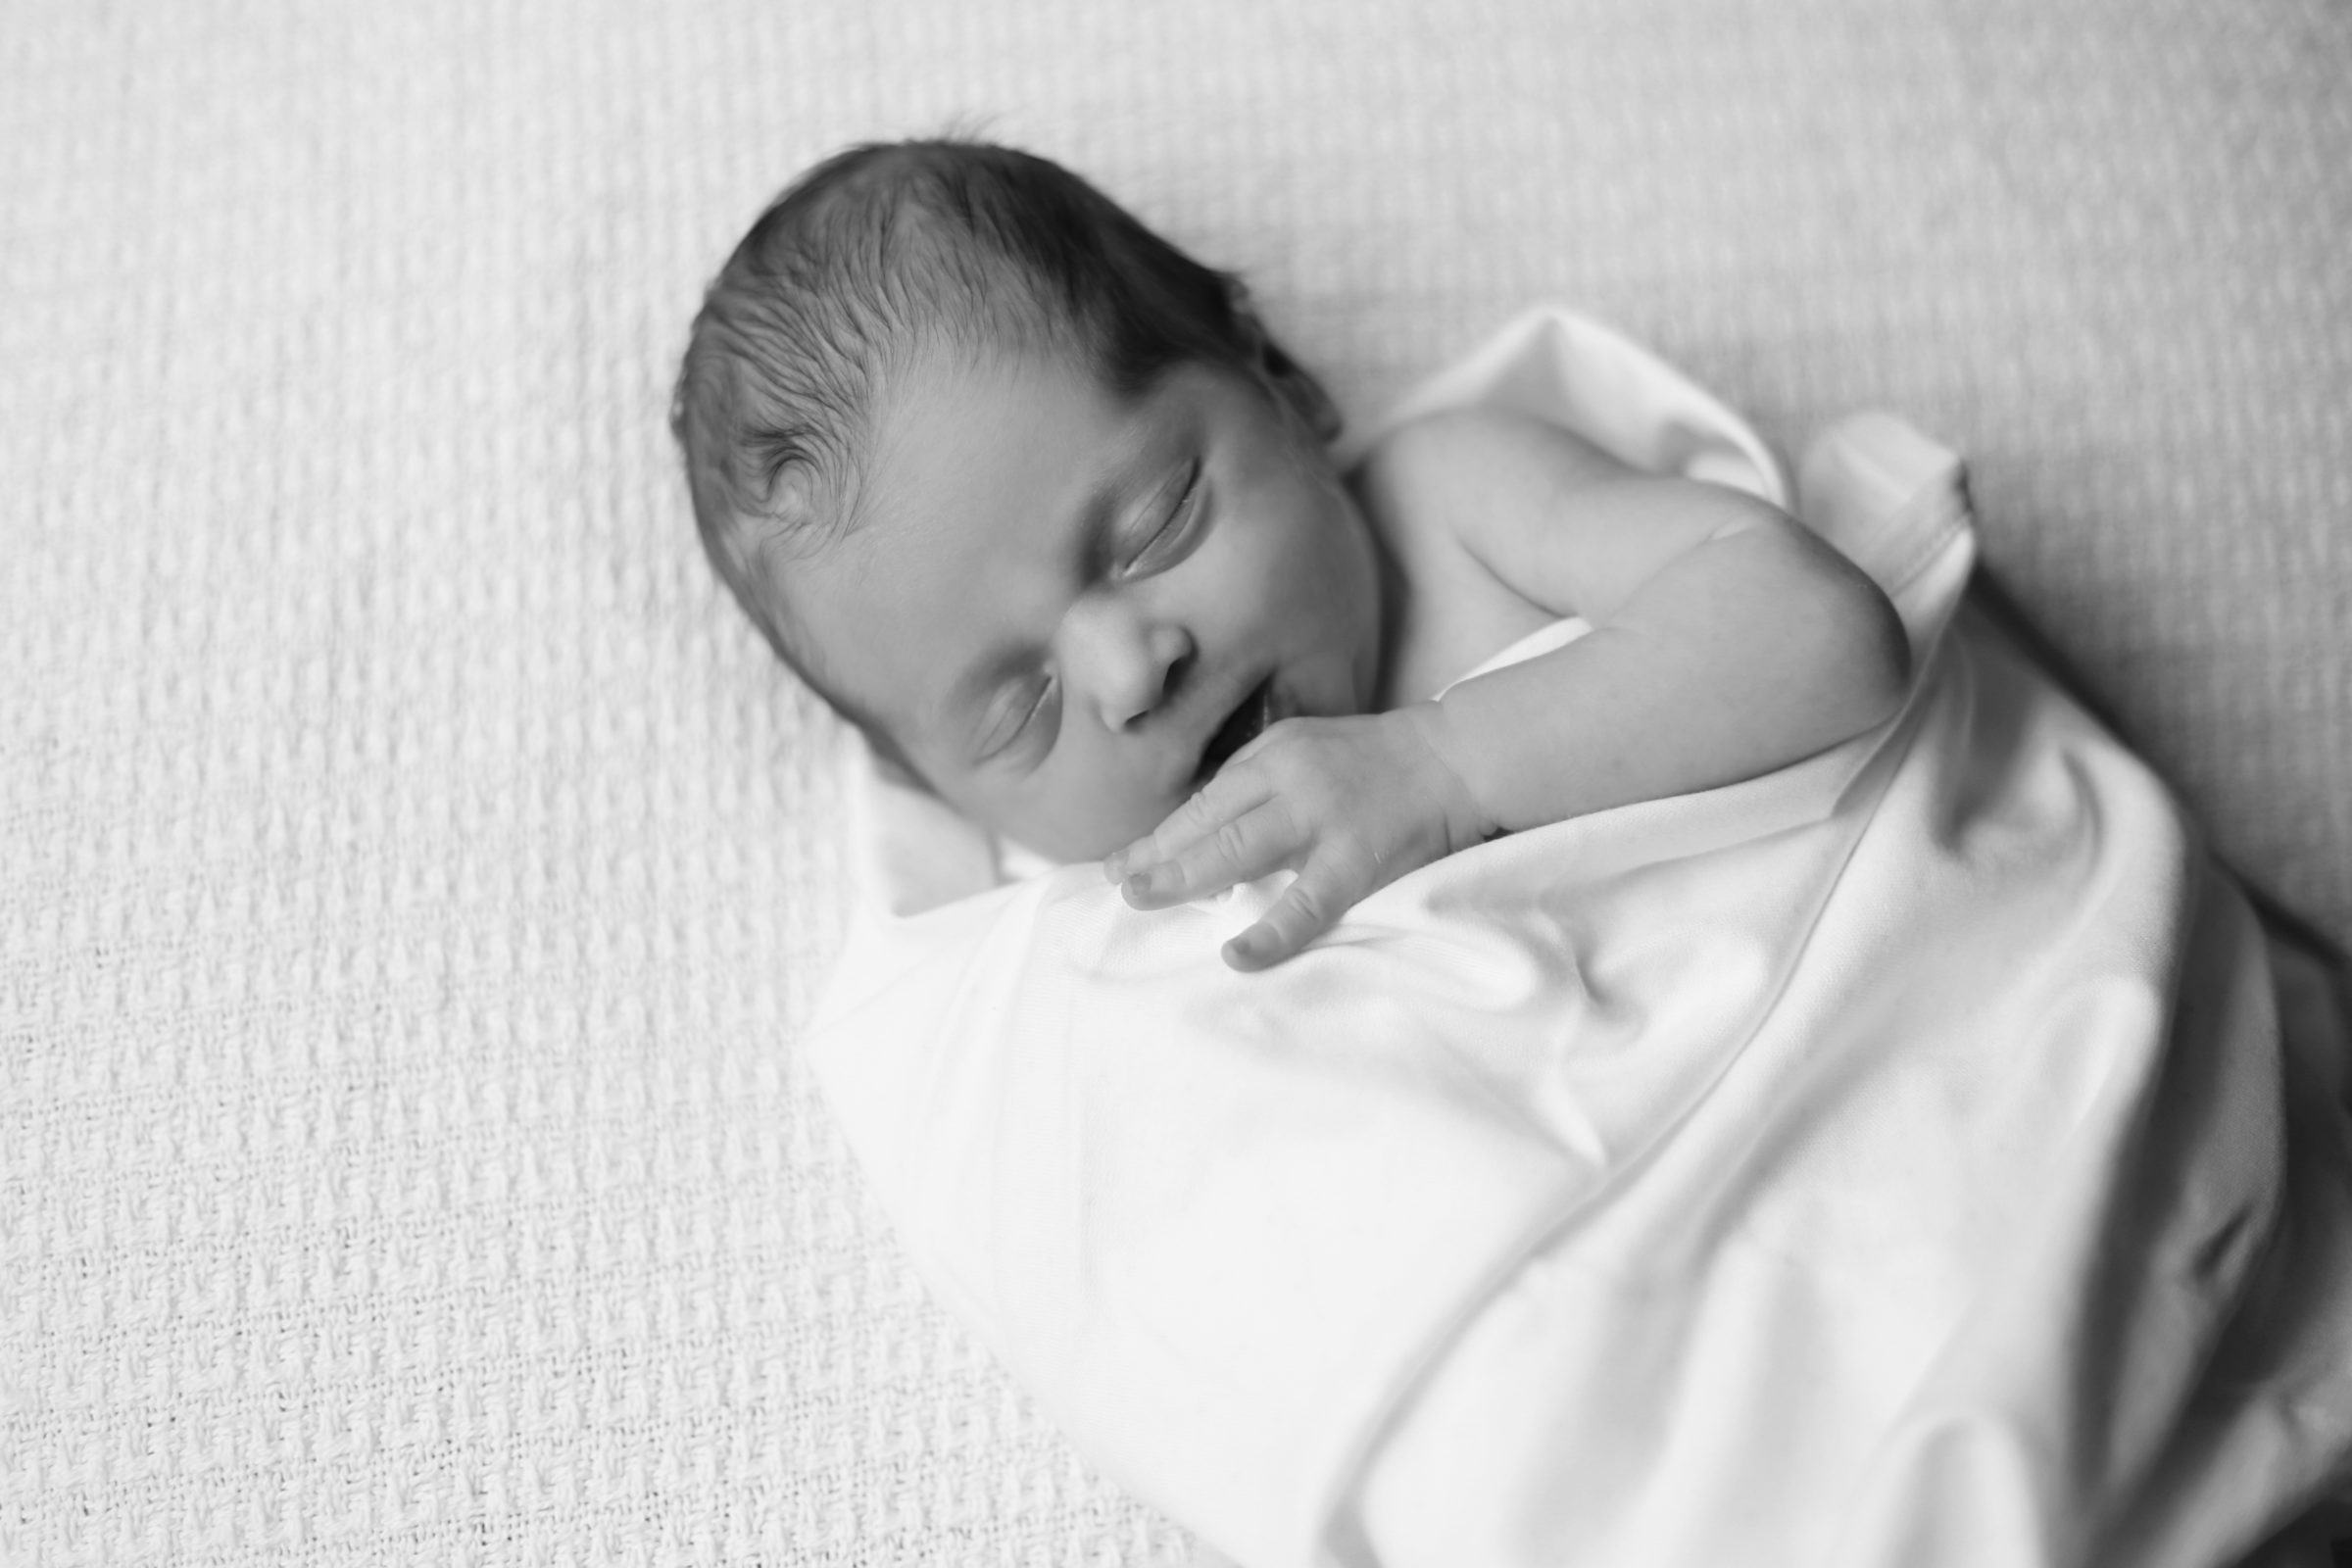 new york city newborn photographer lifestyle baby portrait session black and white classic photoshoot